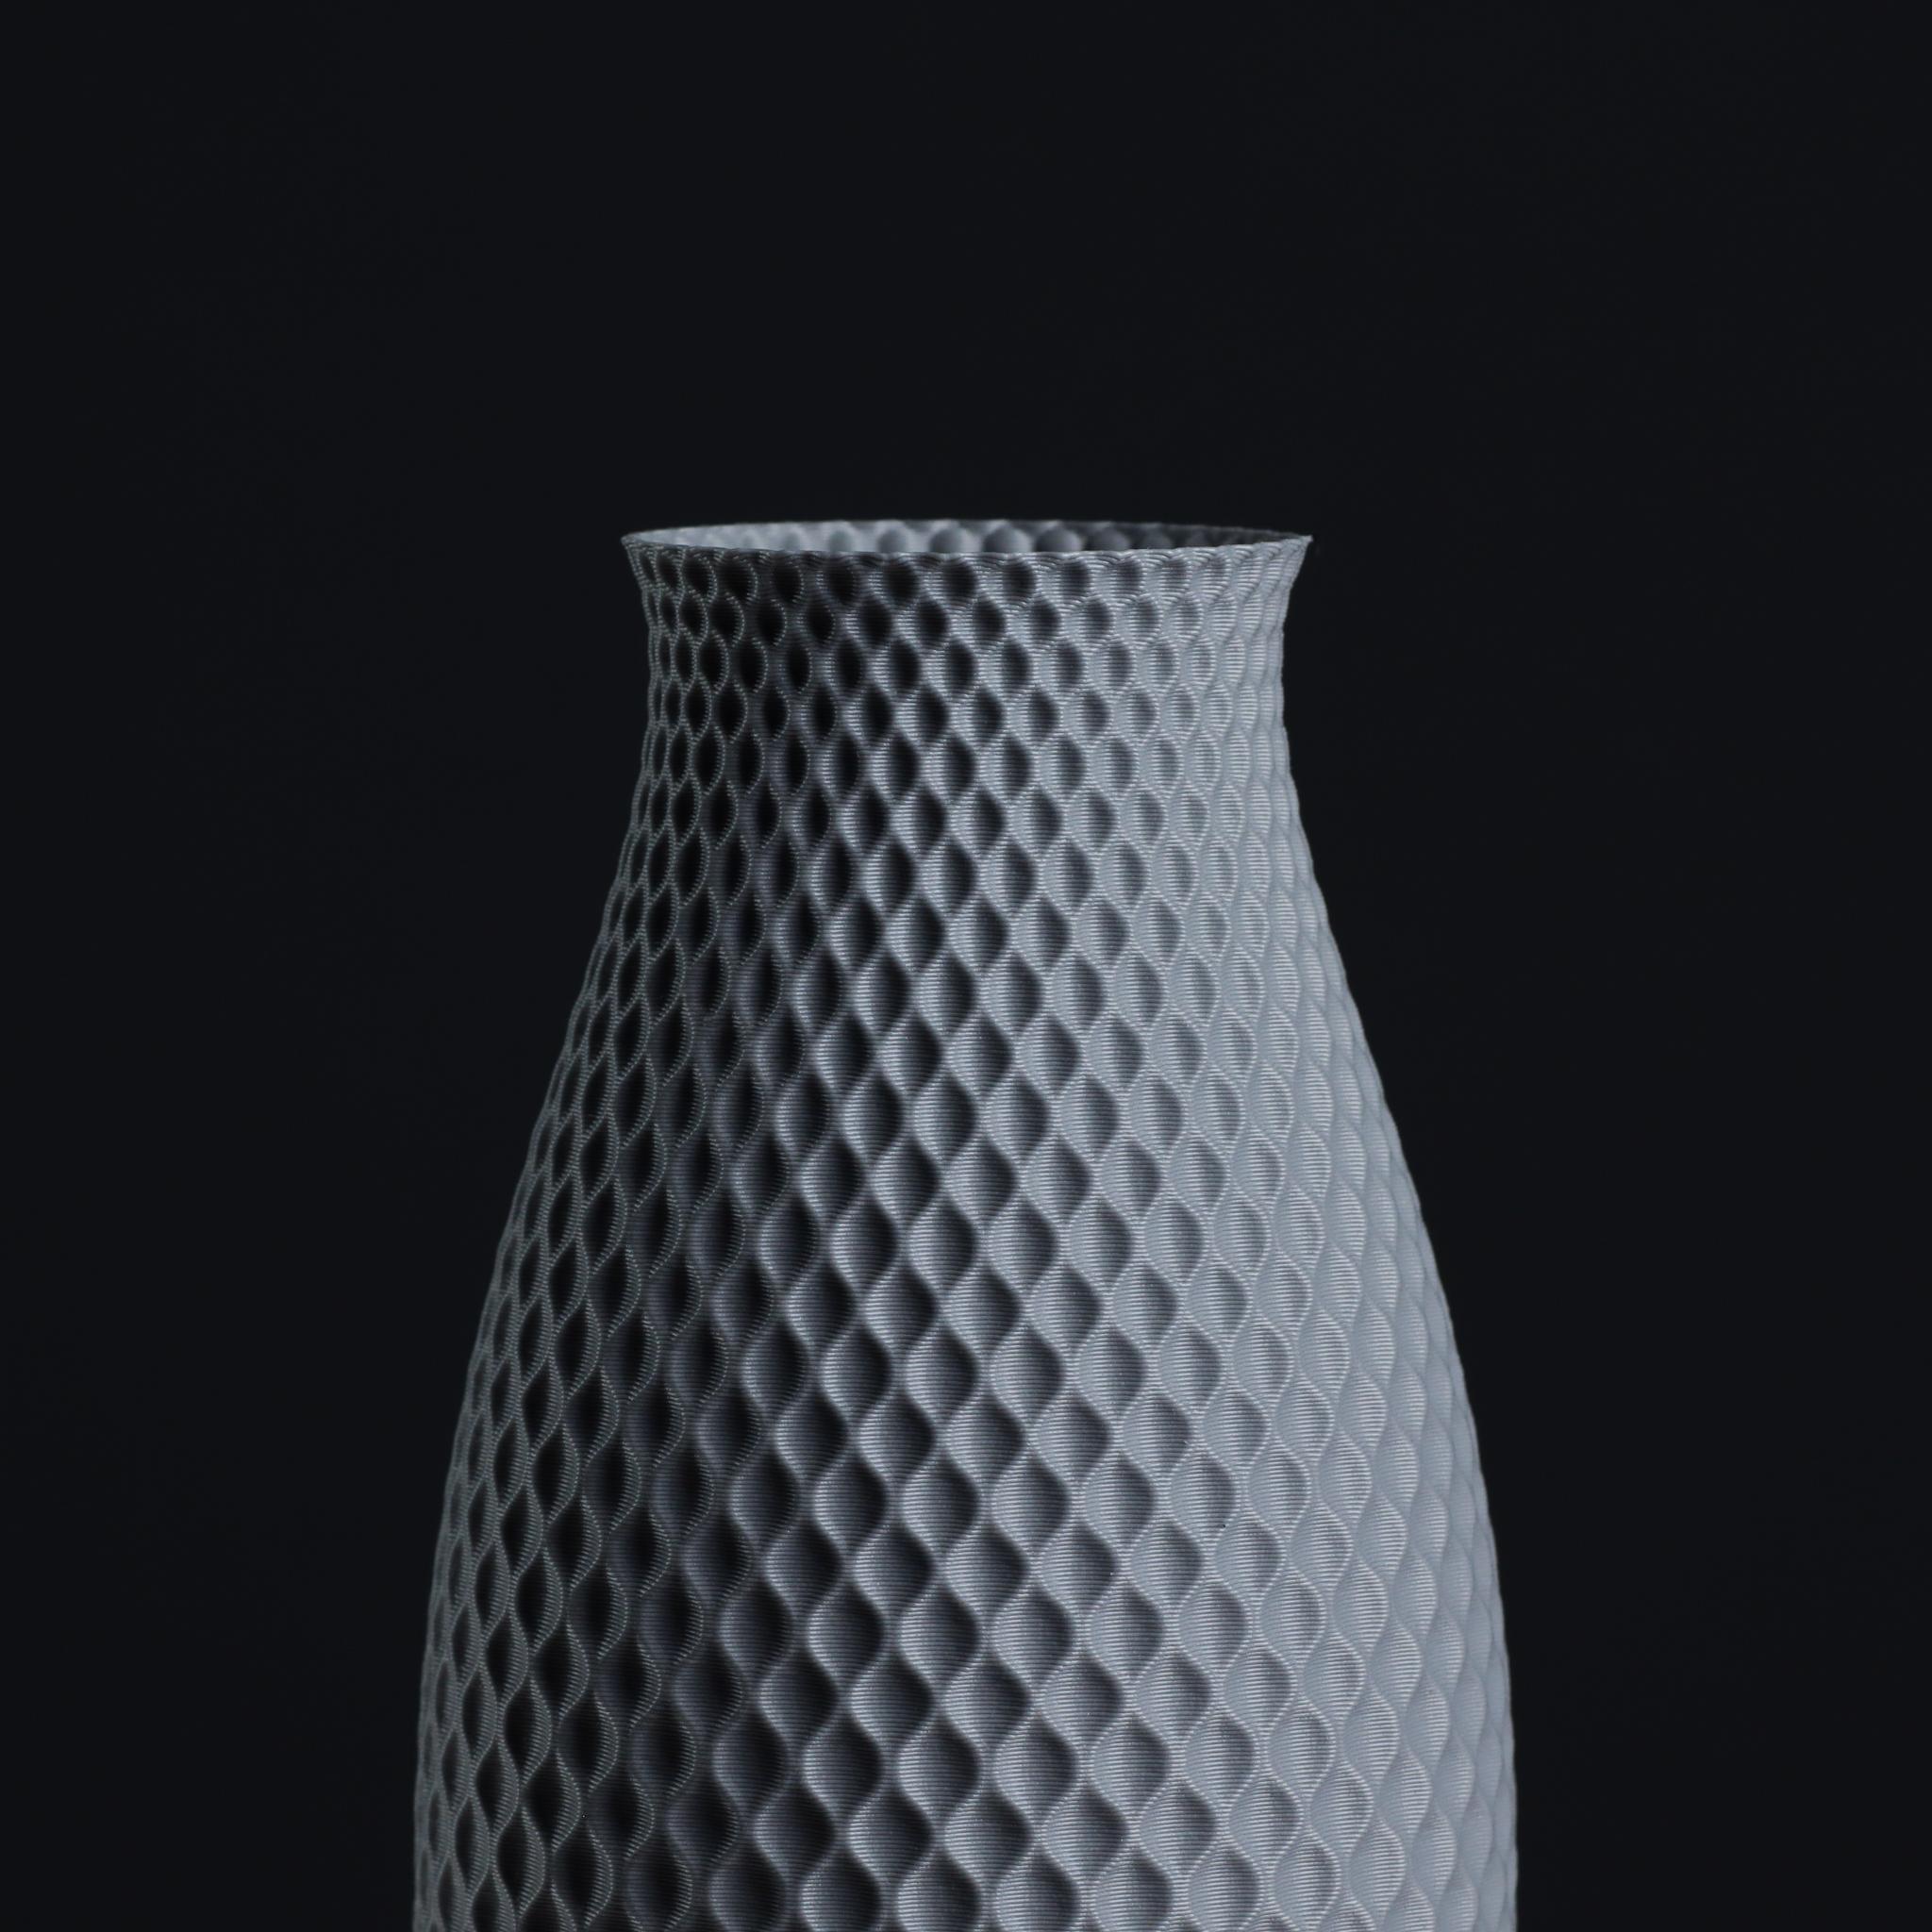  Generative Bulb Vase for Dried Flowers, (vase mode) 3d model